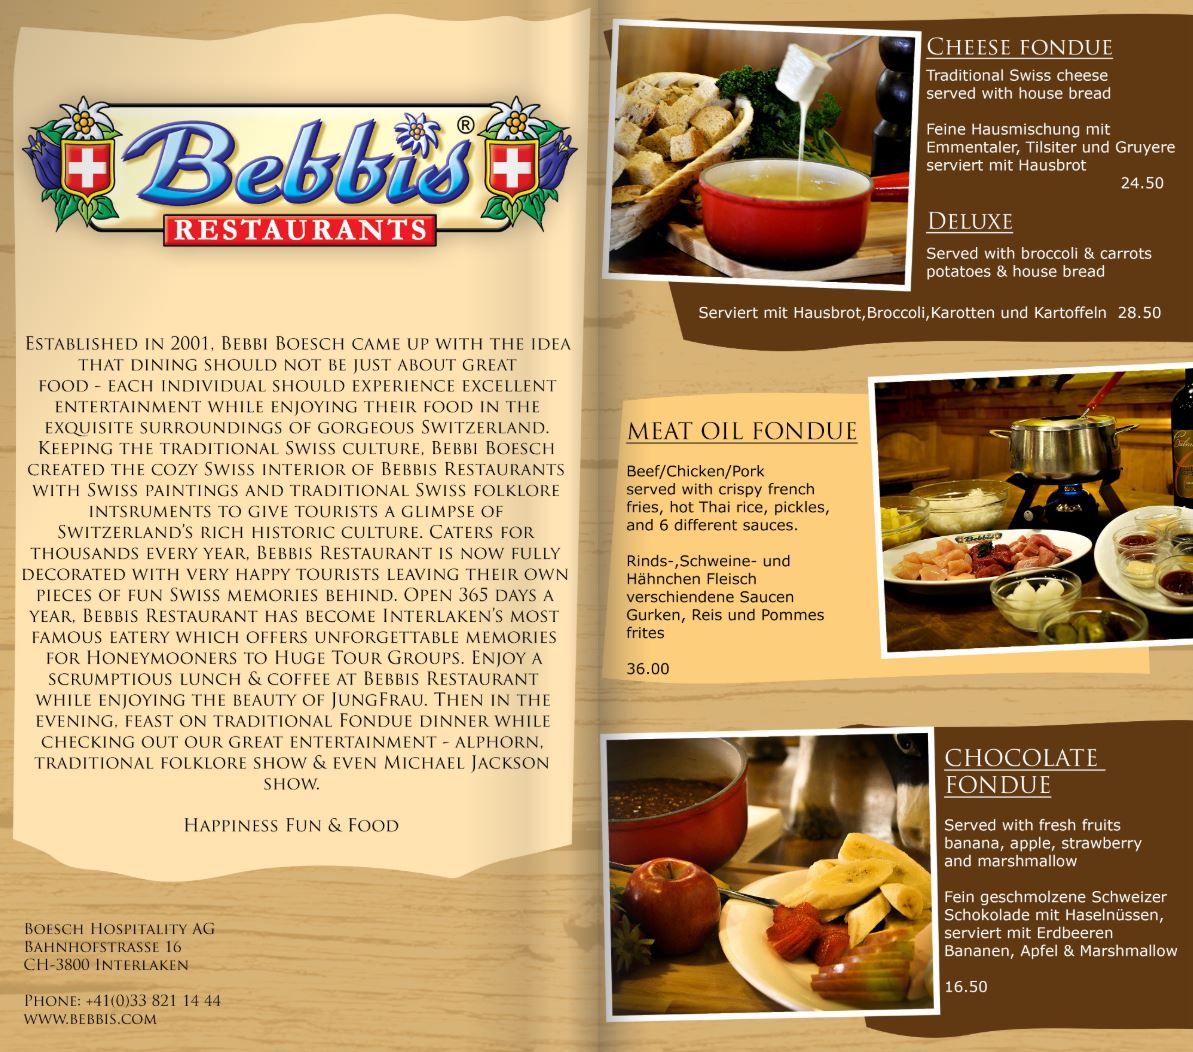 Bebbis Restaurant Cheese Fondue